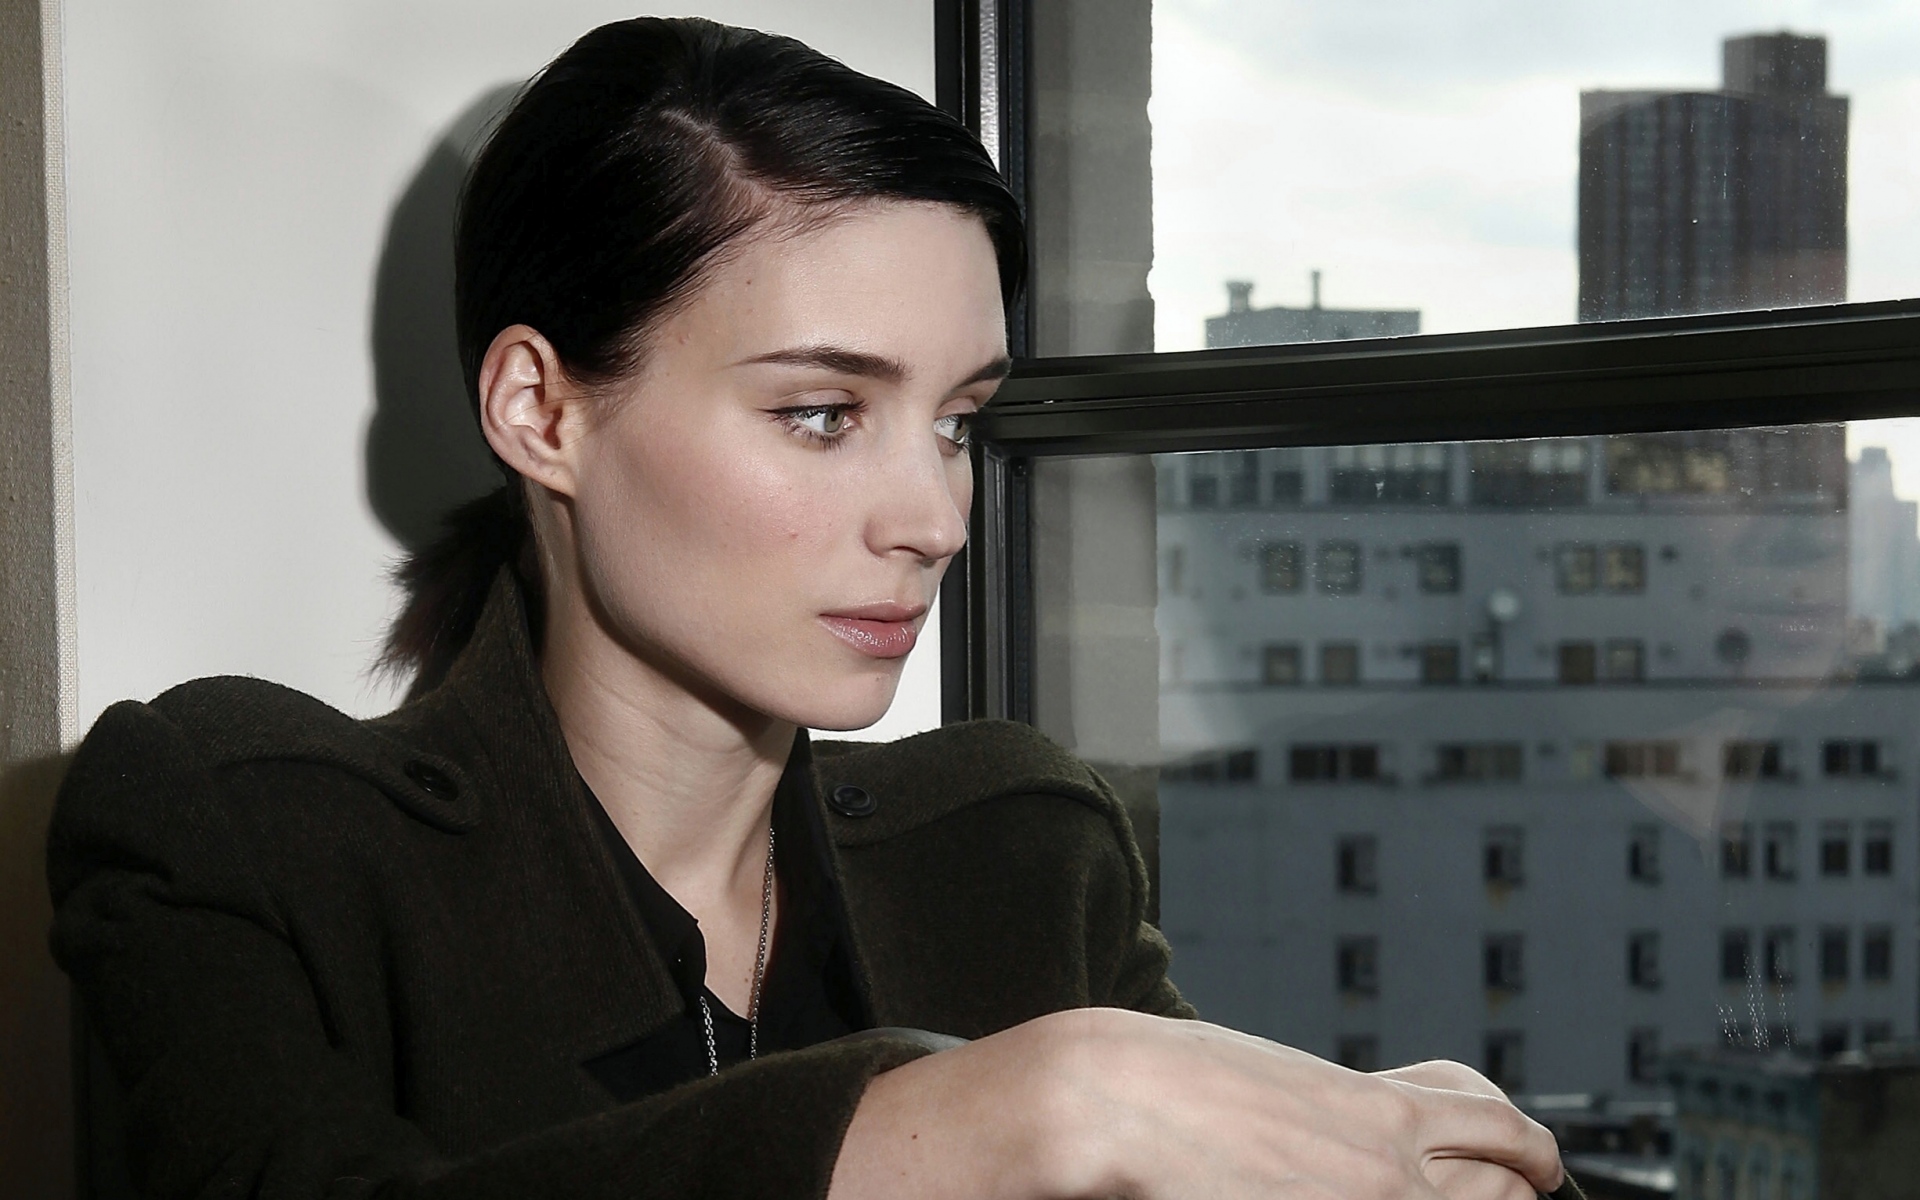 Картинки Rooney mara, актриса, профиль, окно фото и обои на рабочий стол